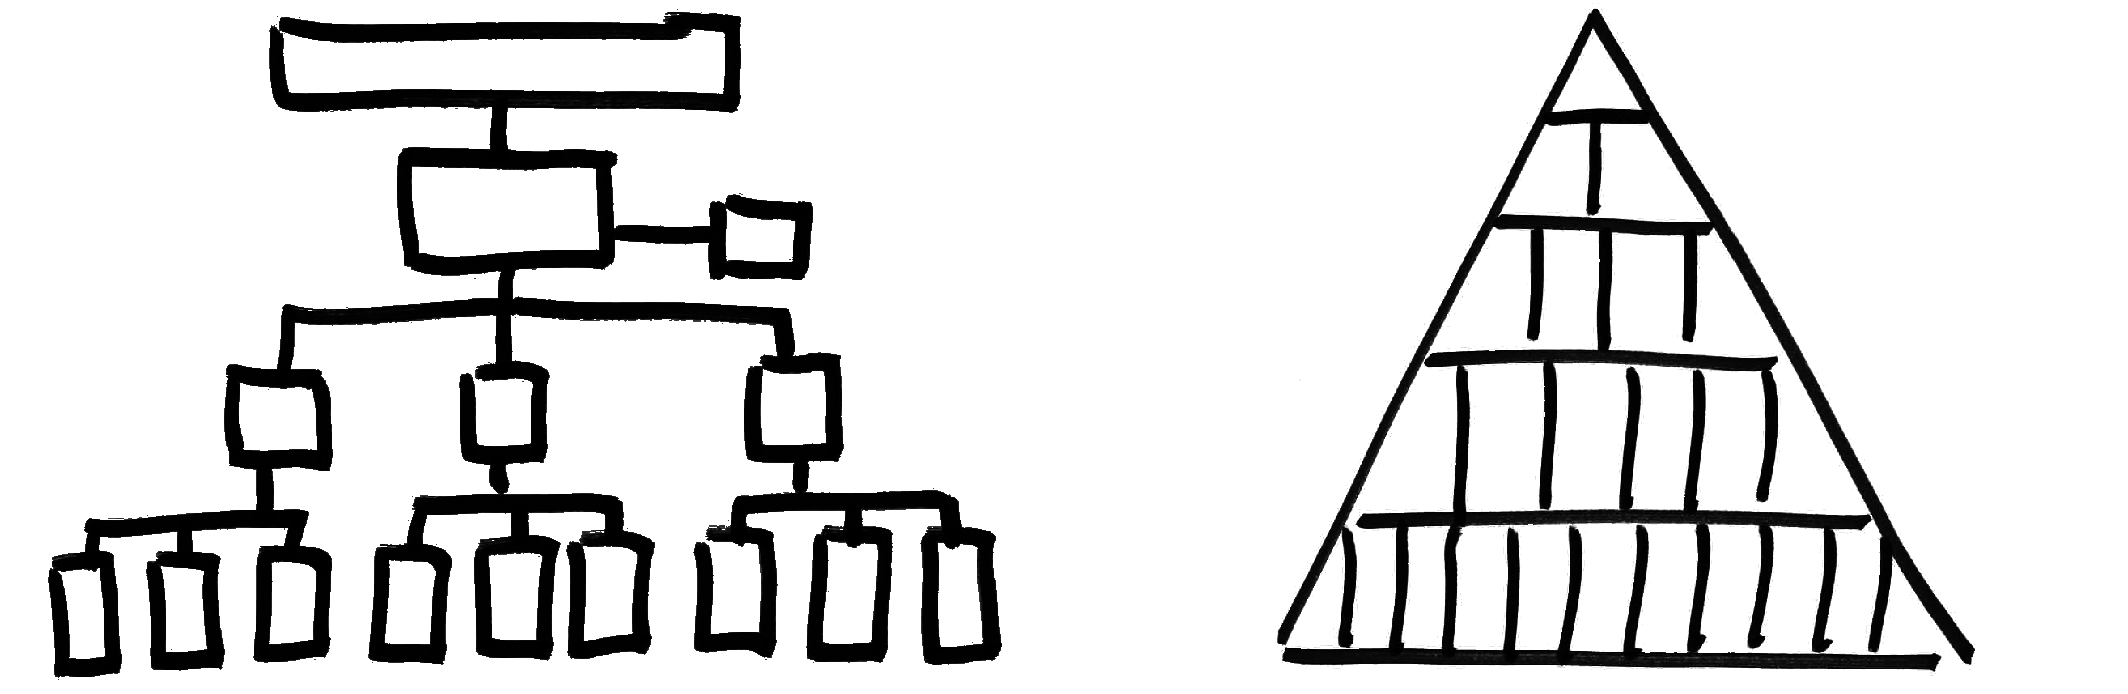 Linienmodell Pyramide